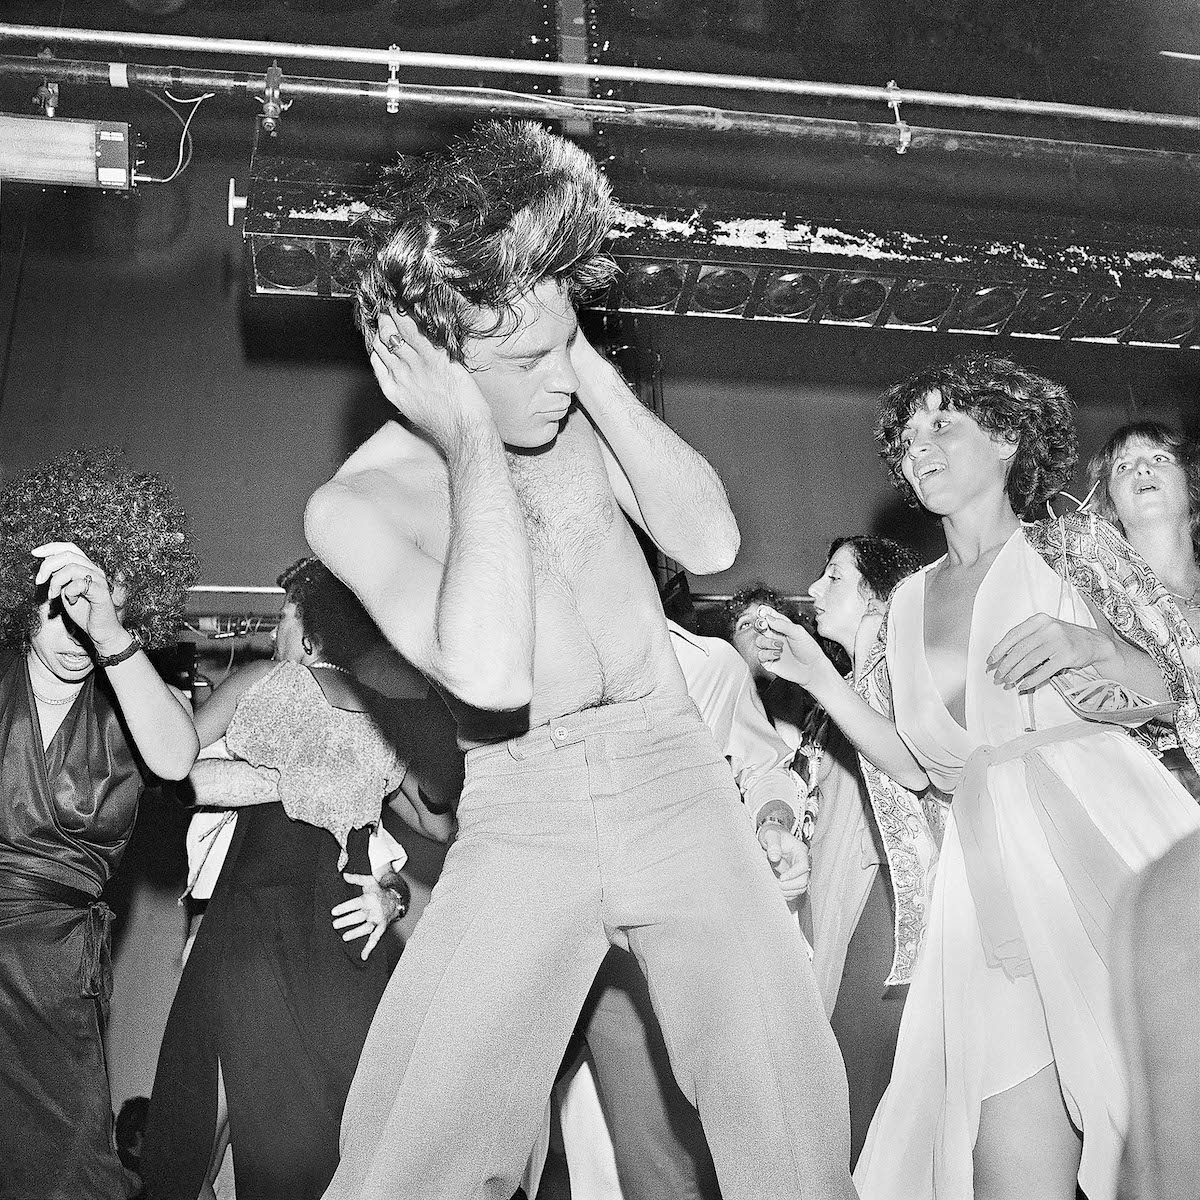 Disco Queens, Punks, and Pioneers: Meryl Meisler's Unforgettable Portraits of NYC Women